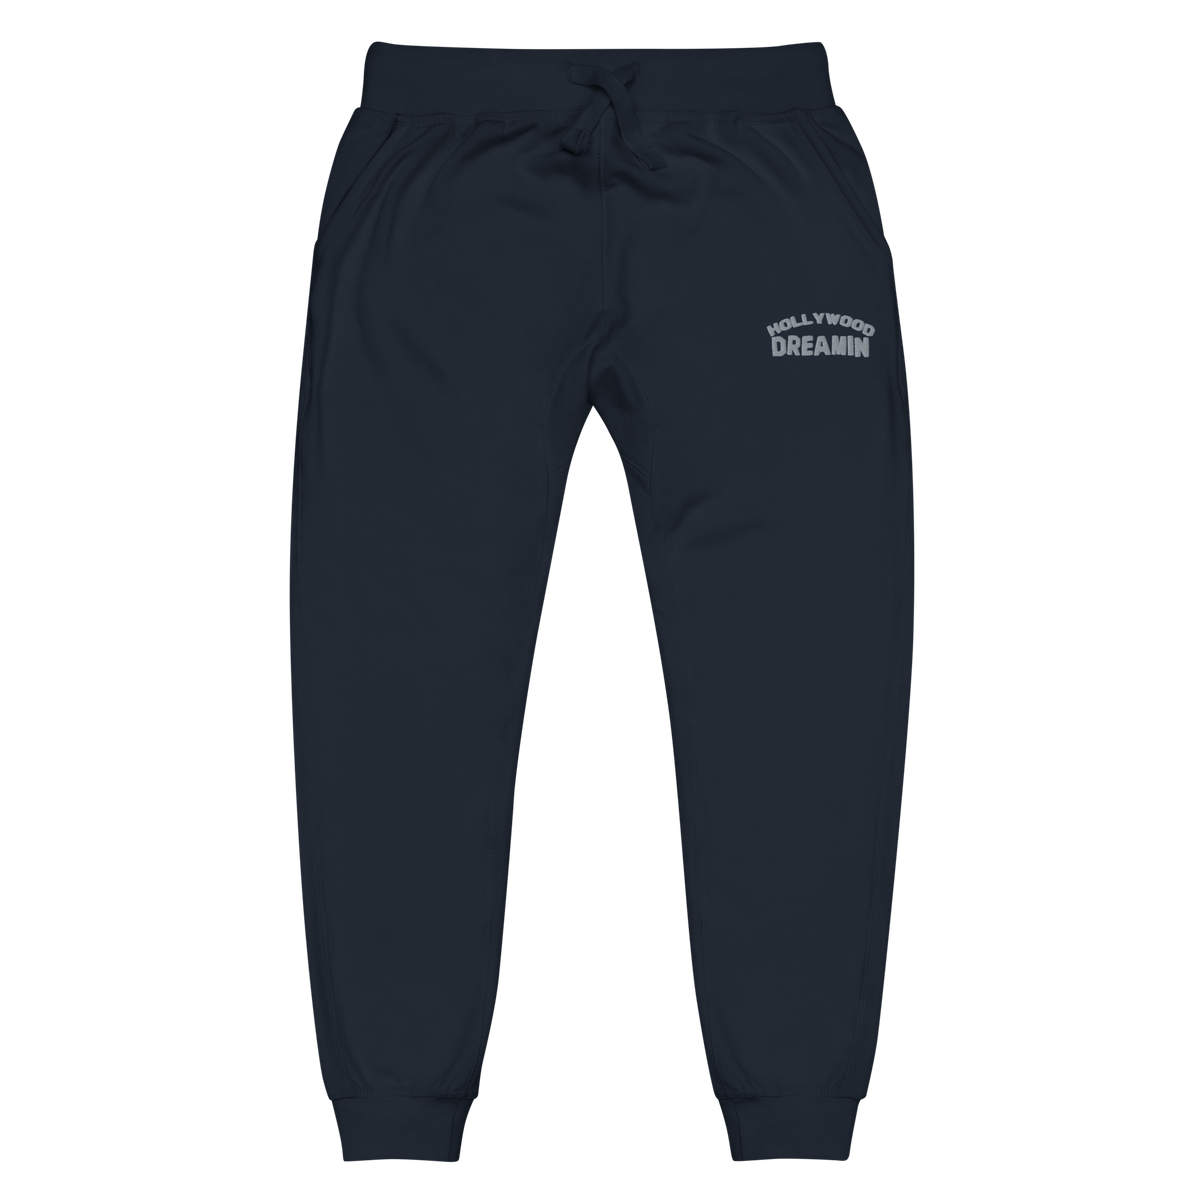 Navy Blue Sweatpants w/ Grey Logo – Hollywood Dreamin'